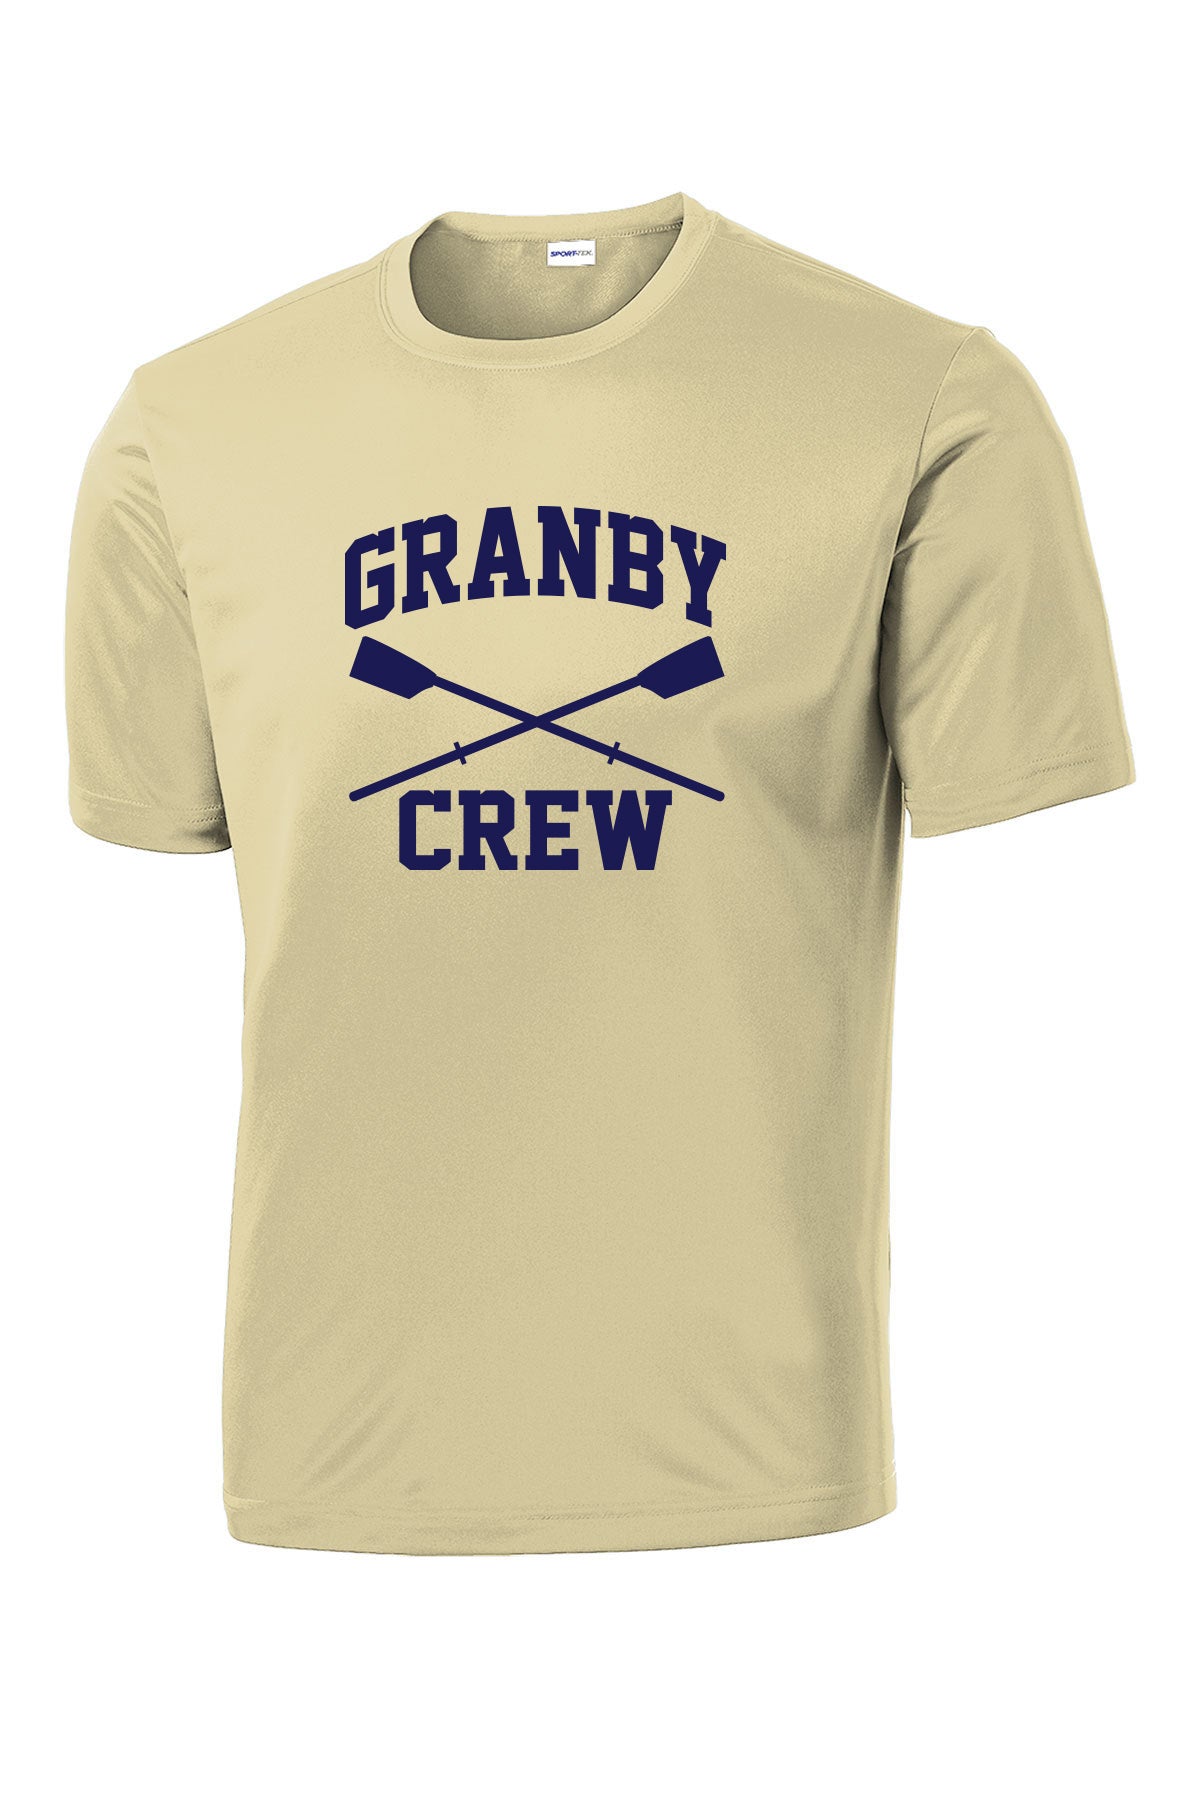 Granby Crew Men's Drytex Performance T-Shirt